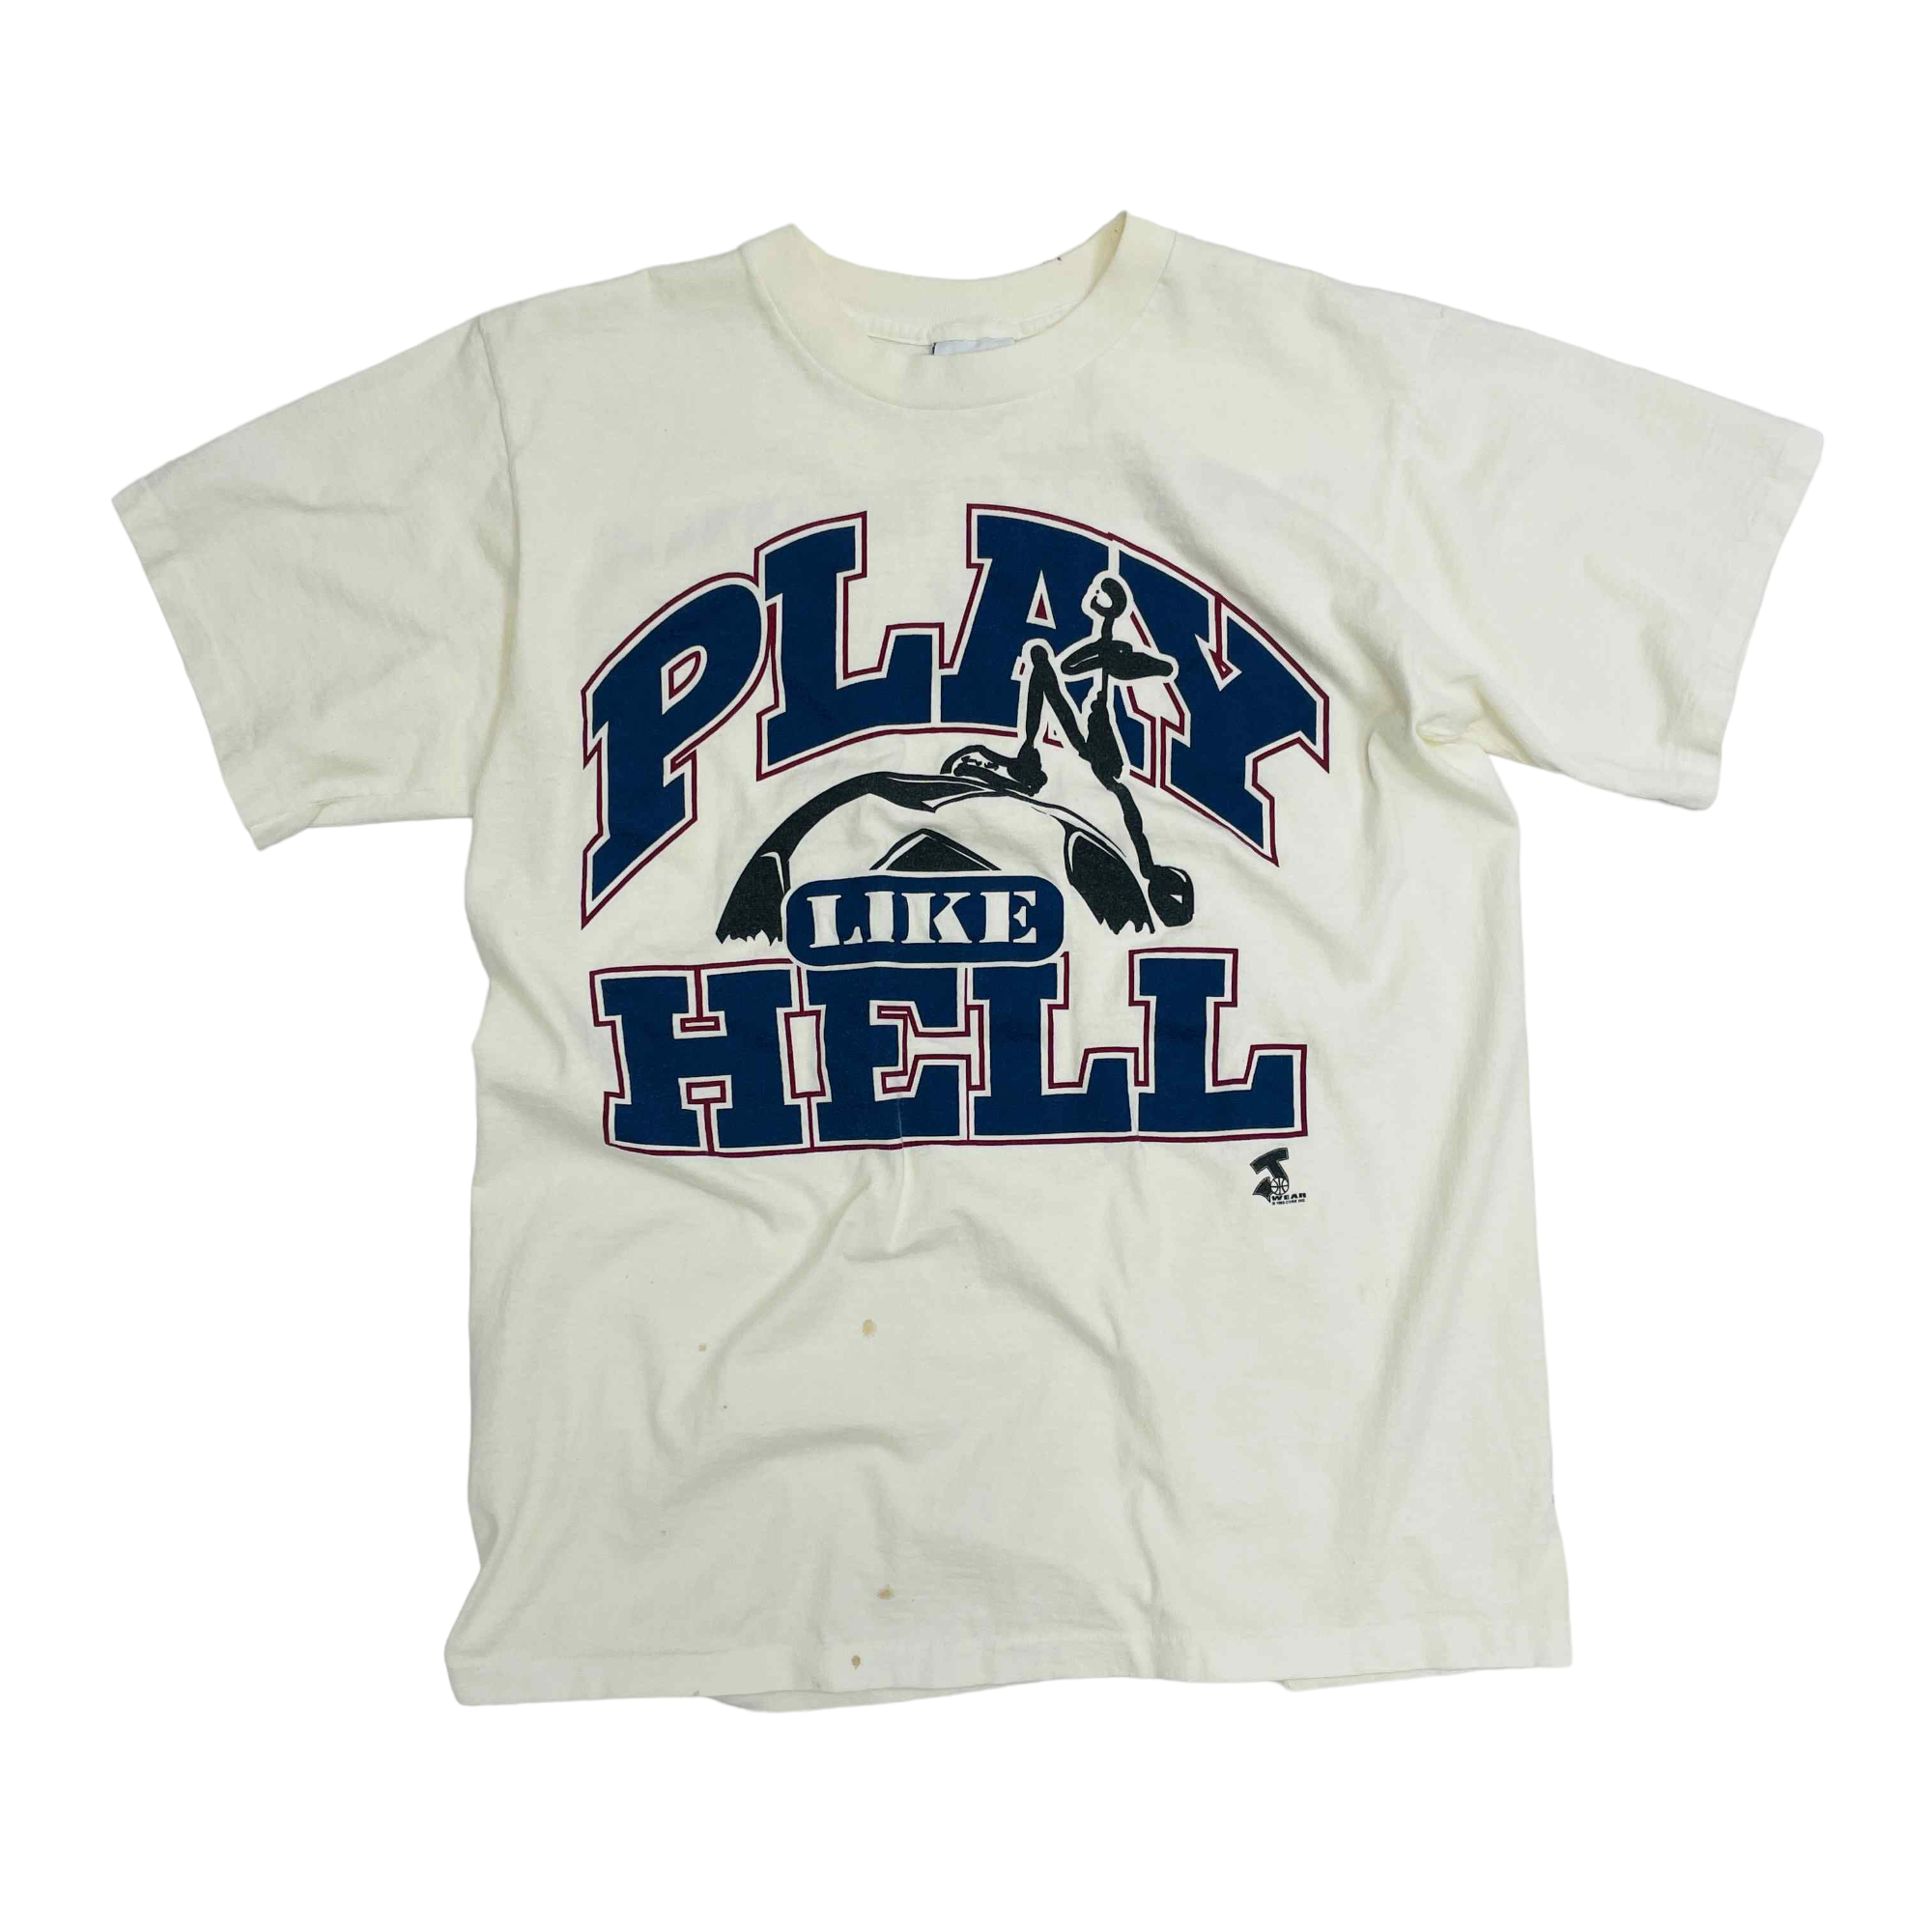 Play Like Hell Graphic T-Shirt - Medium